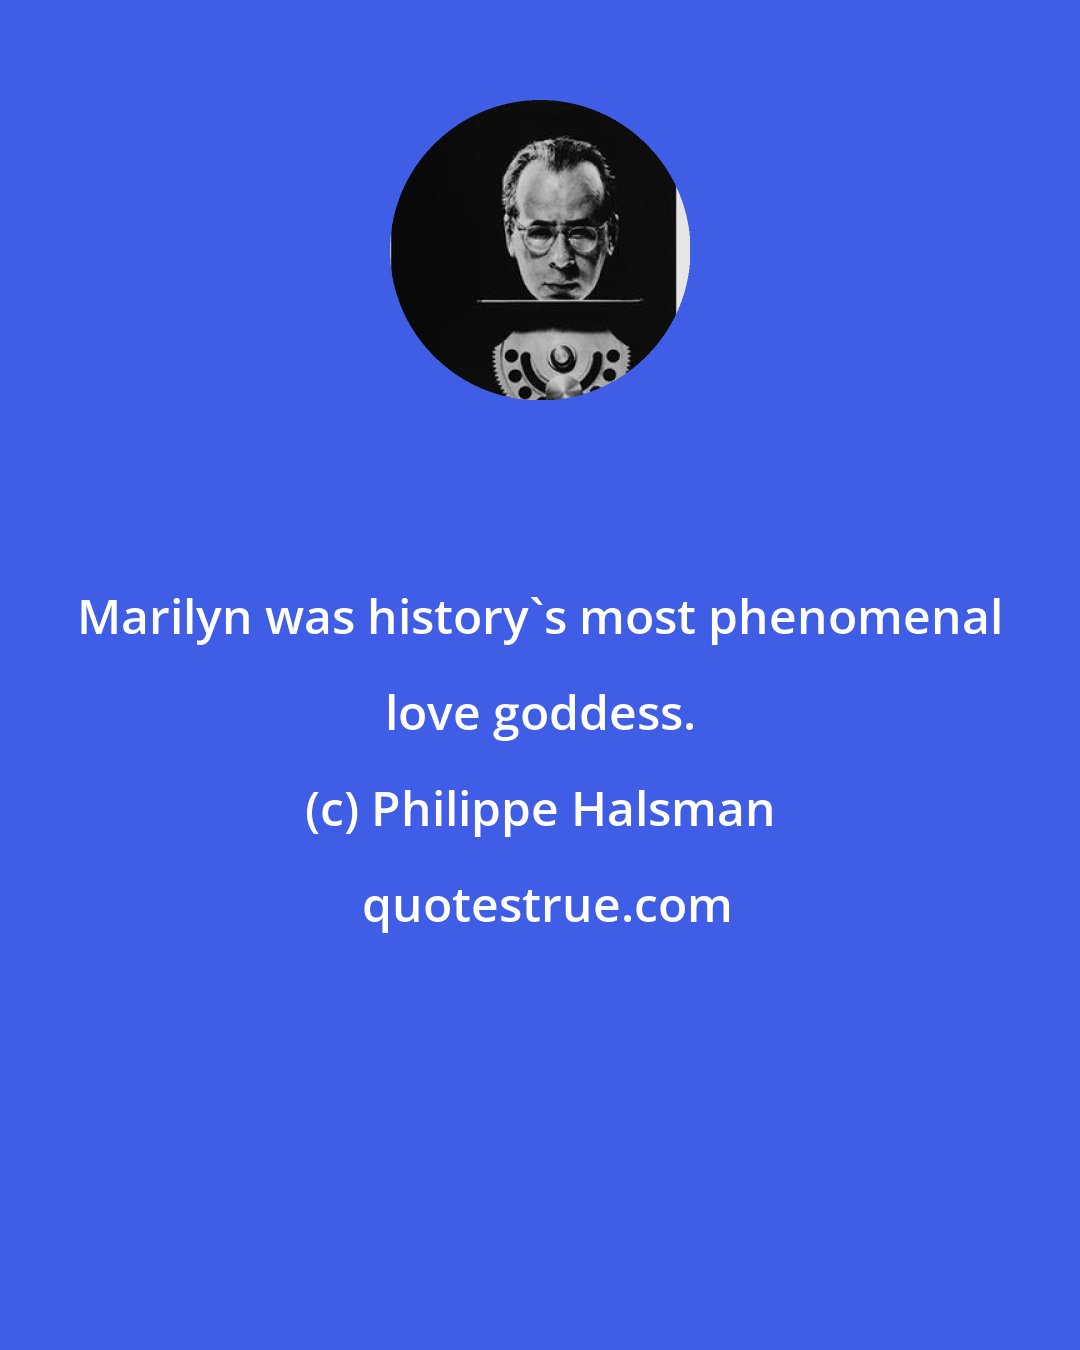 Philippe Halsman: Marilyn was history's most phenomenal love goddess.